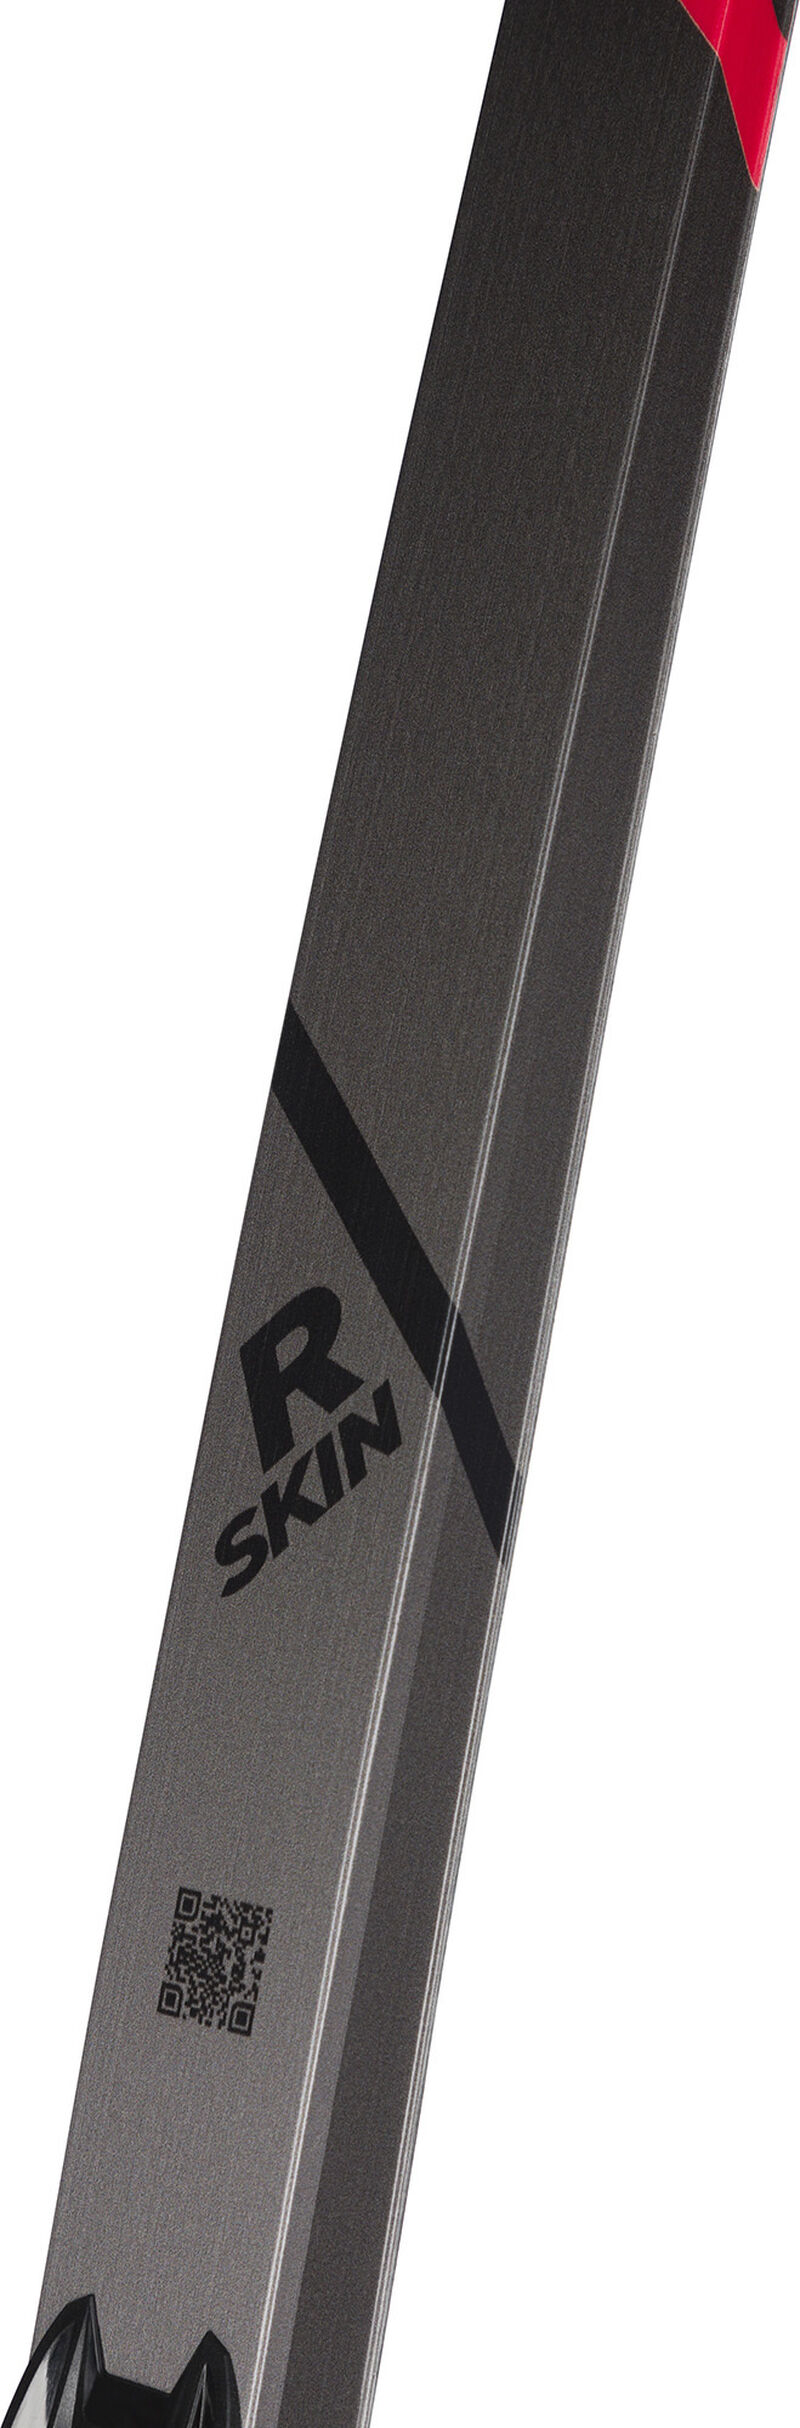 Skis de fond Racing unisexe DELTA COURSE R-SKIN STIFF